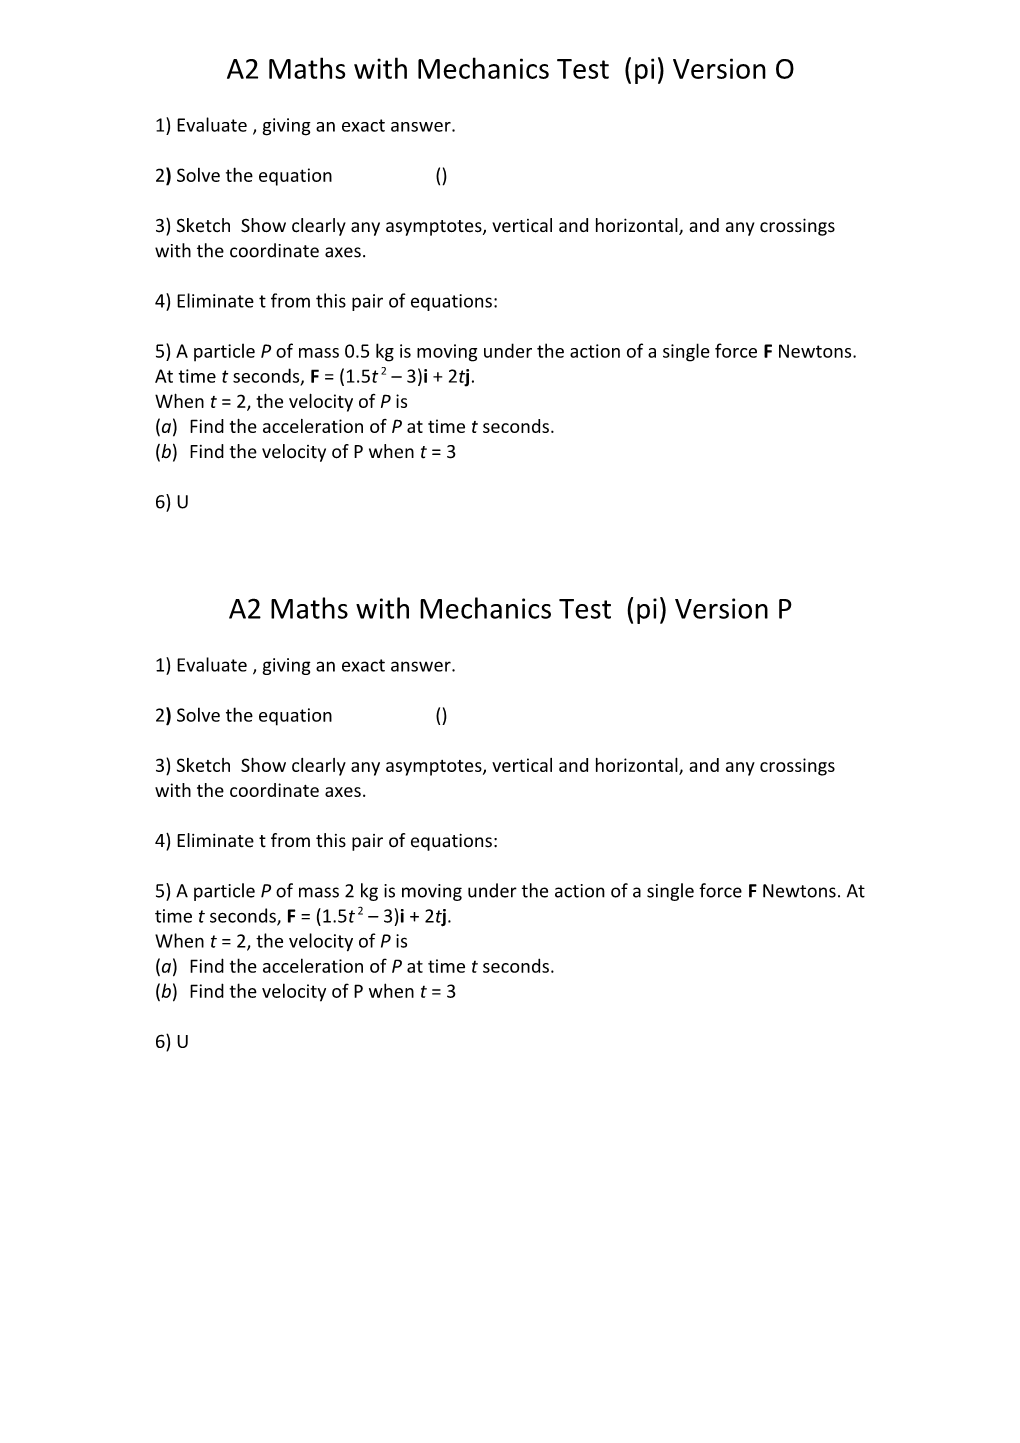 A2 Maths with Mechanics Test Π (Pi) Version O